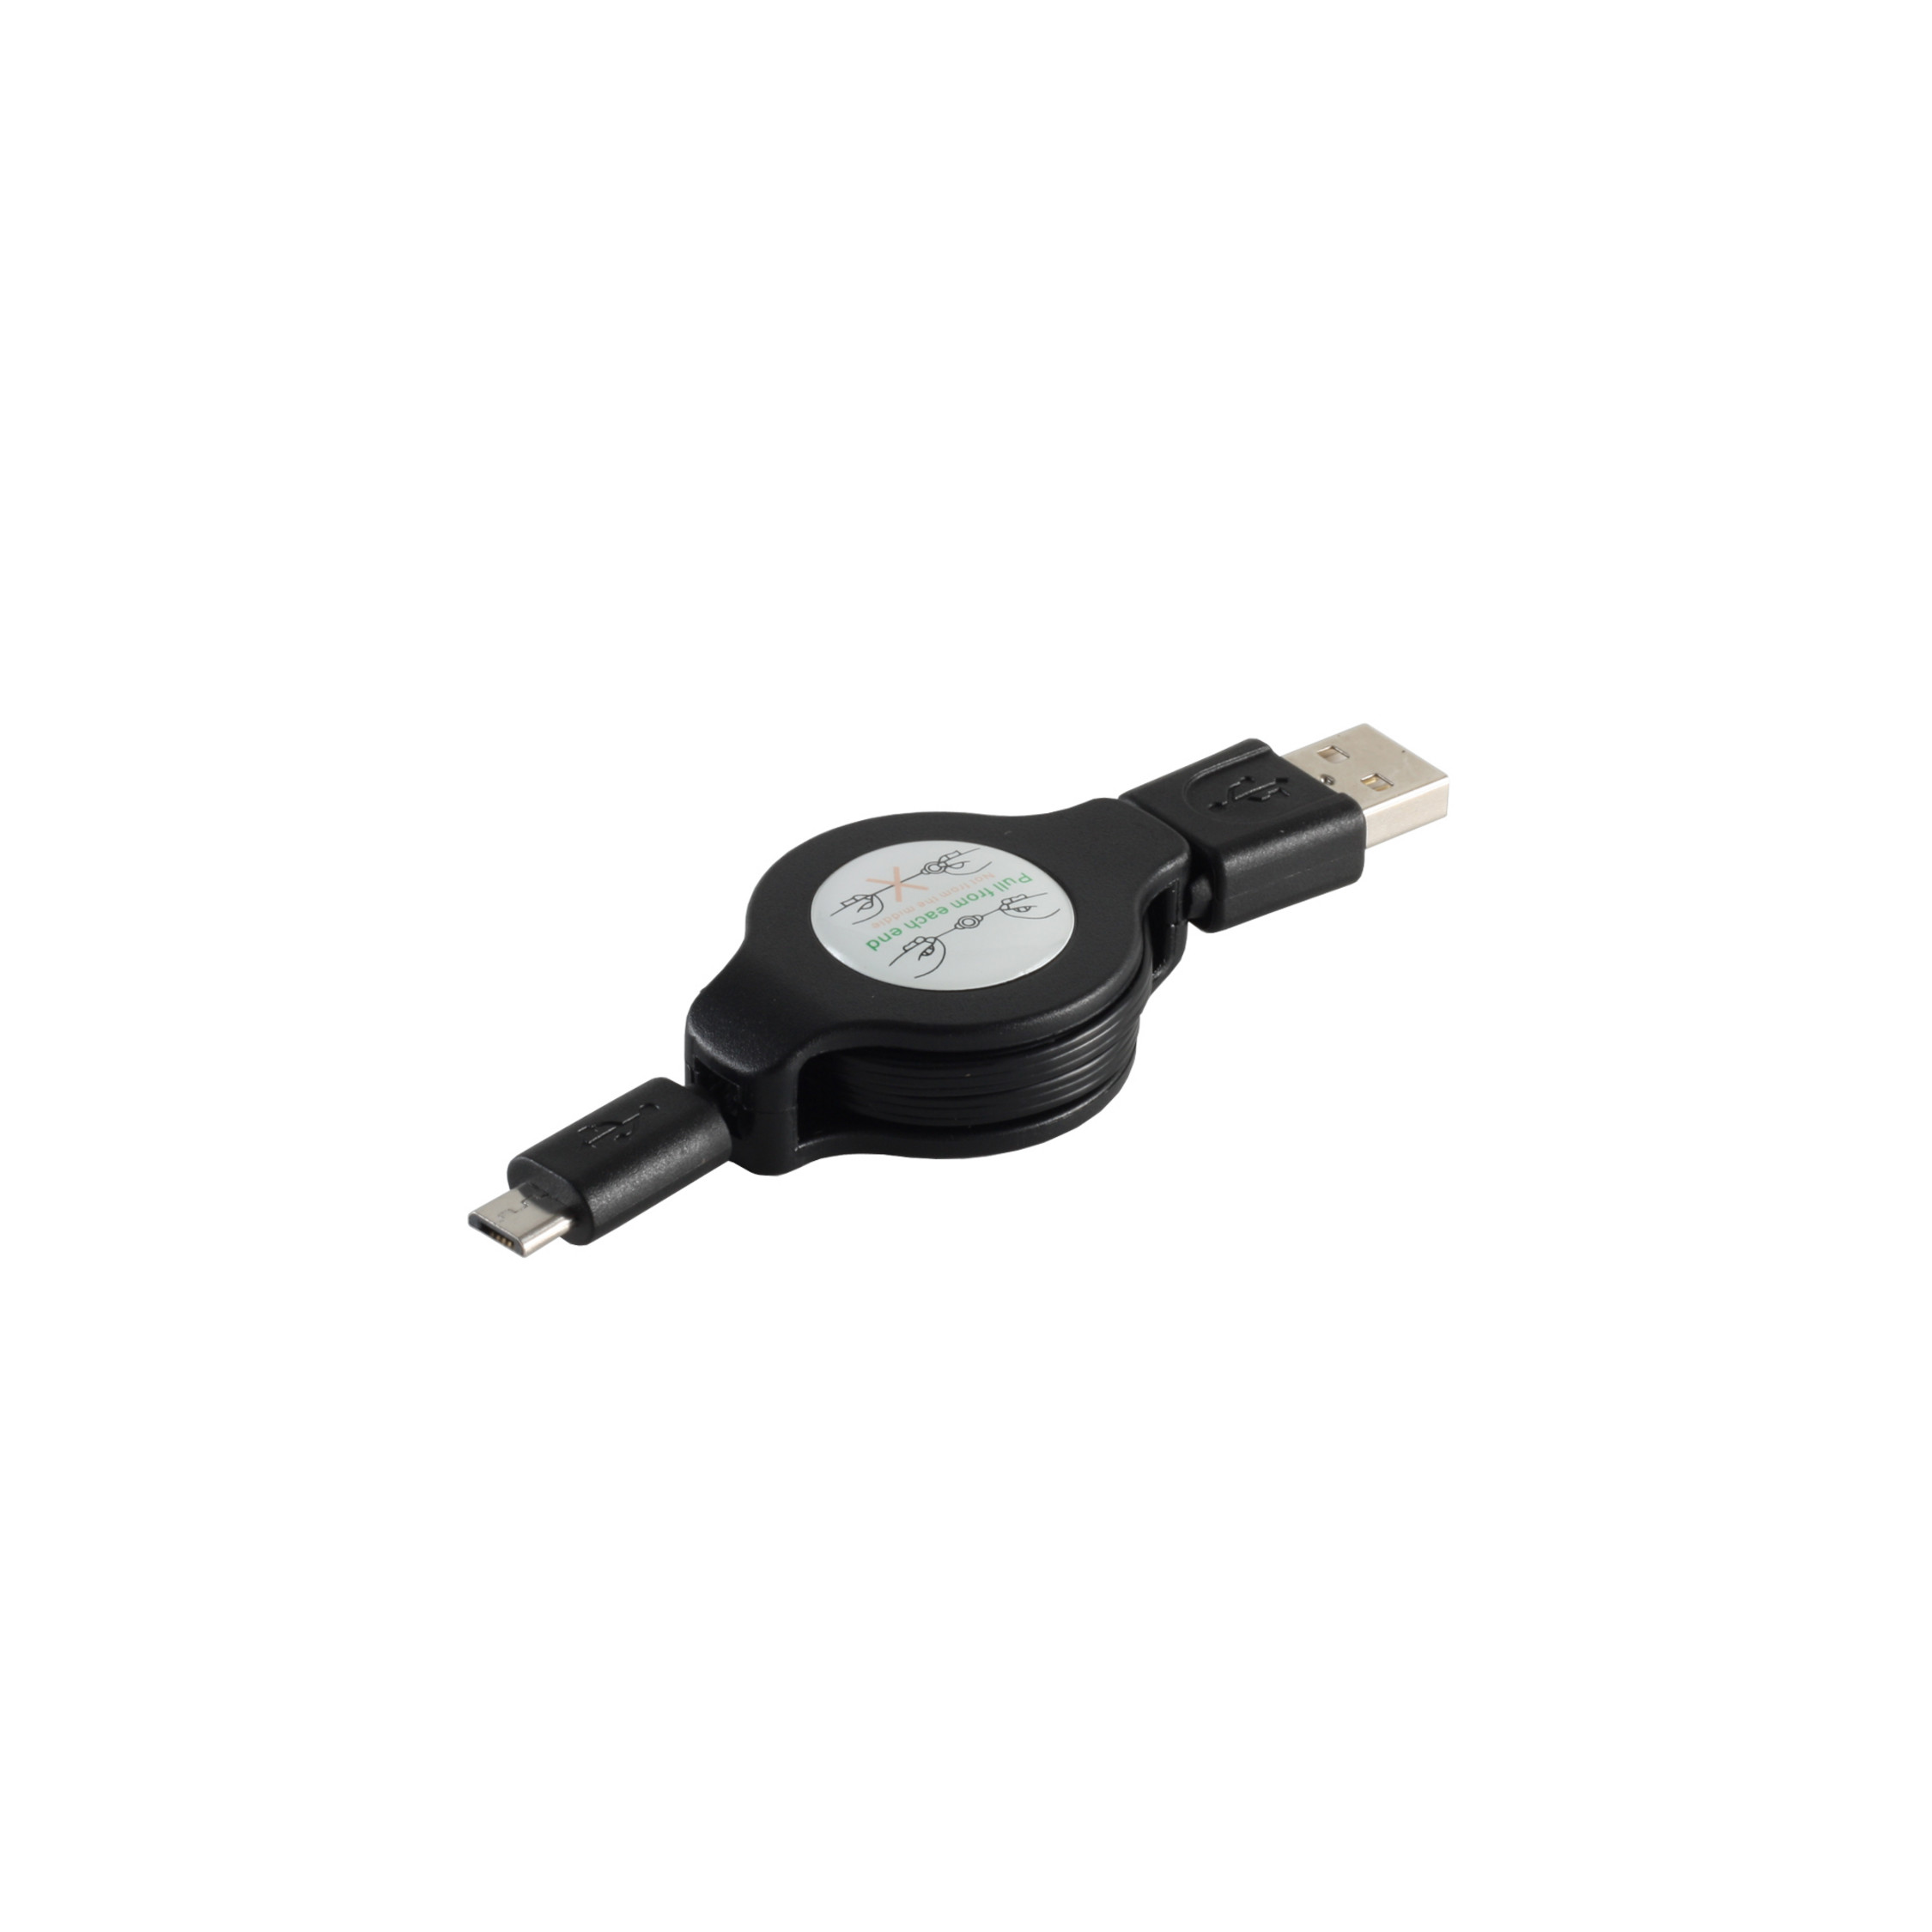 schwarz USB-MicroB USB 1 SHIVERPEAKS 1m, USB-A-Stecker m, Stecker ausziehbar Ladekabel, auf